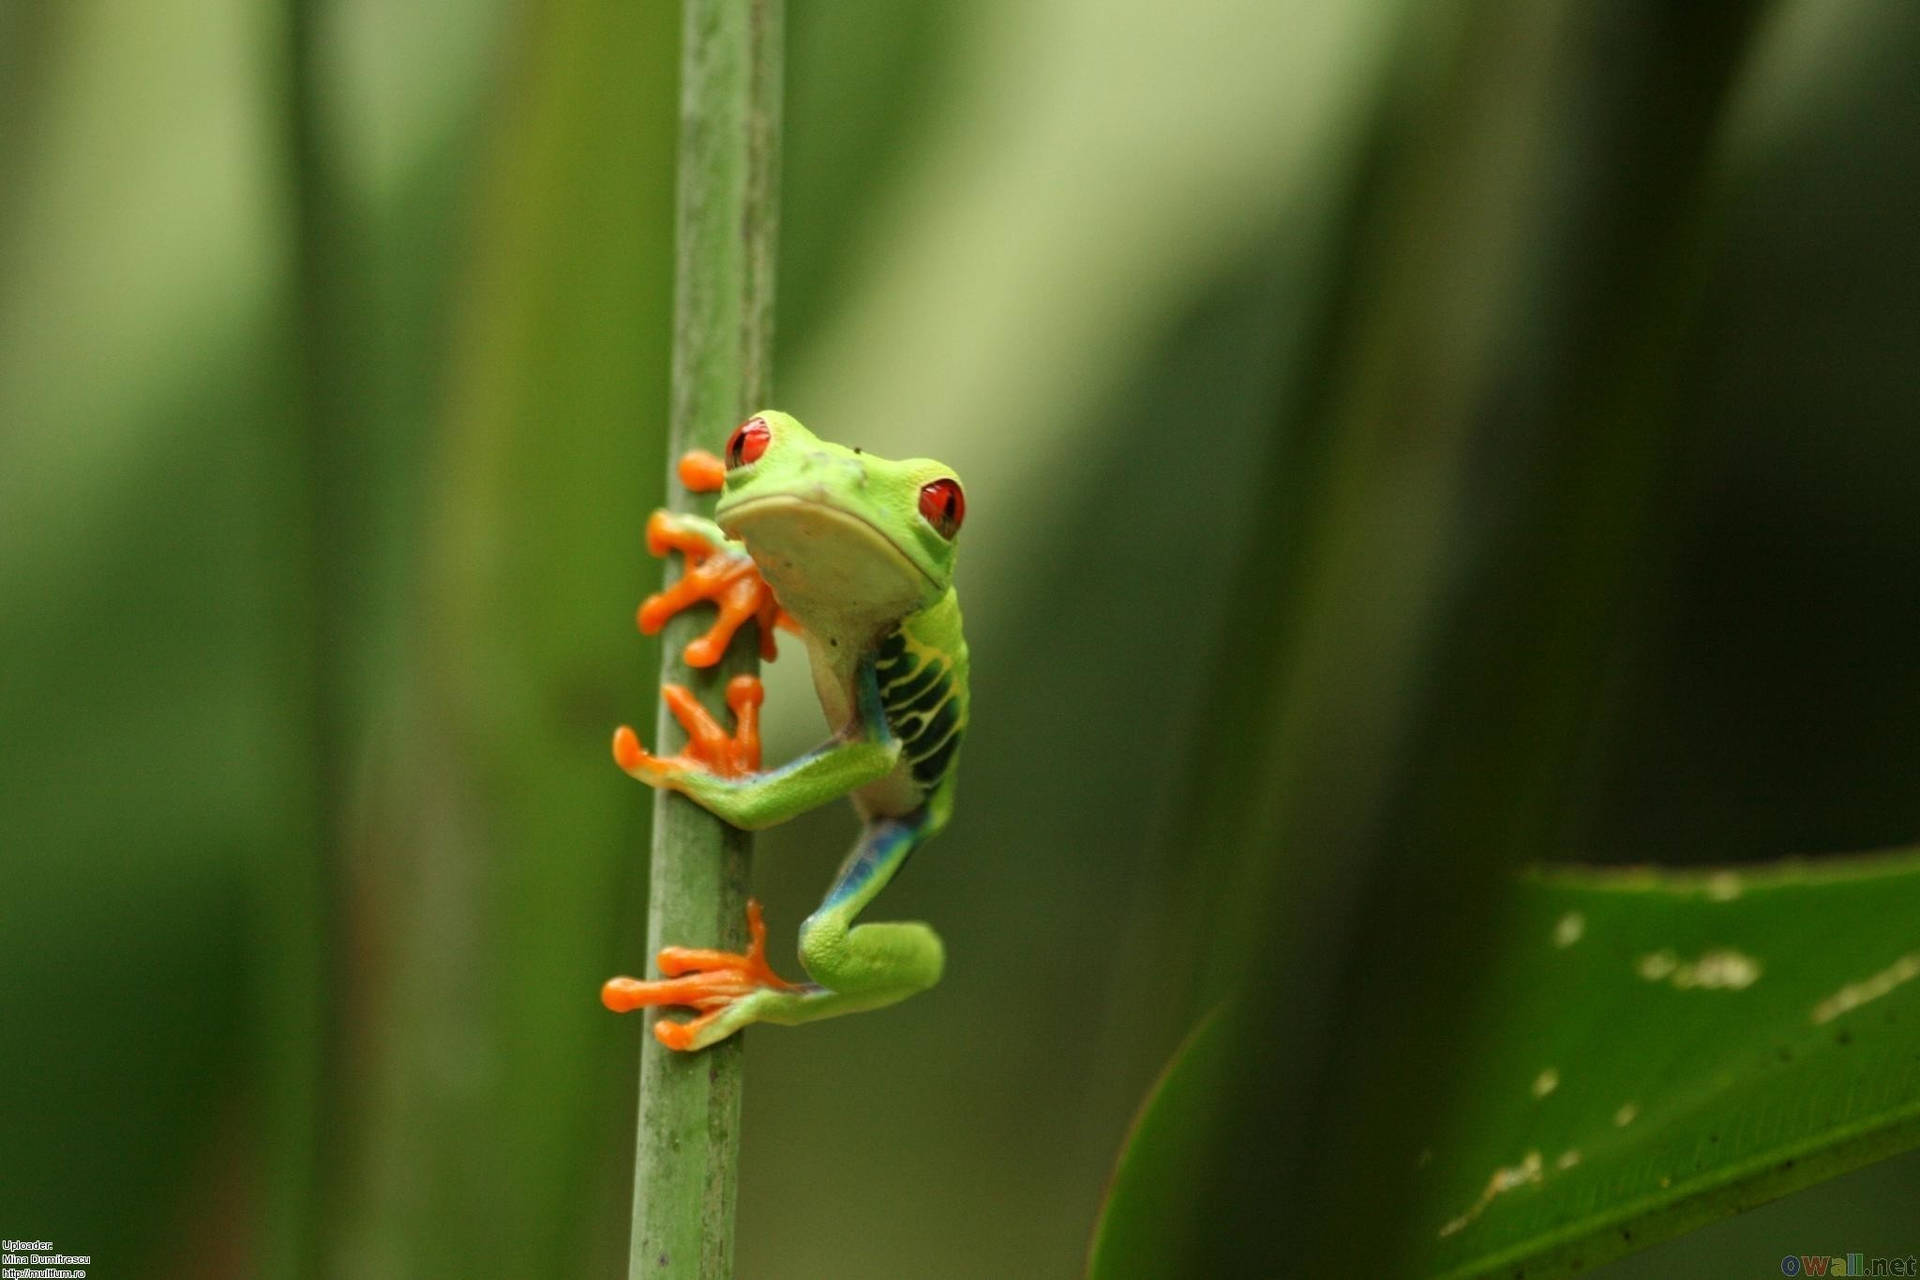 Climbing Red-eyed Kawaii Frog